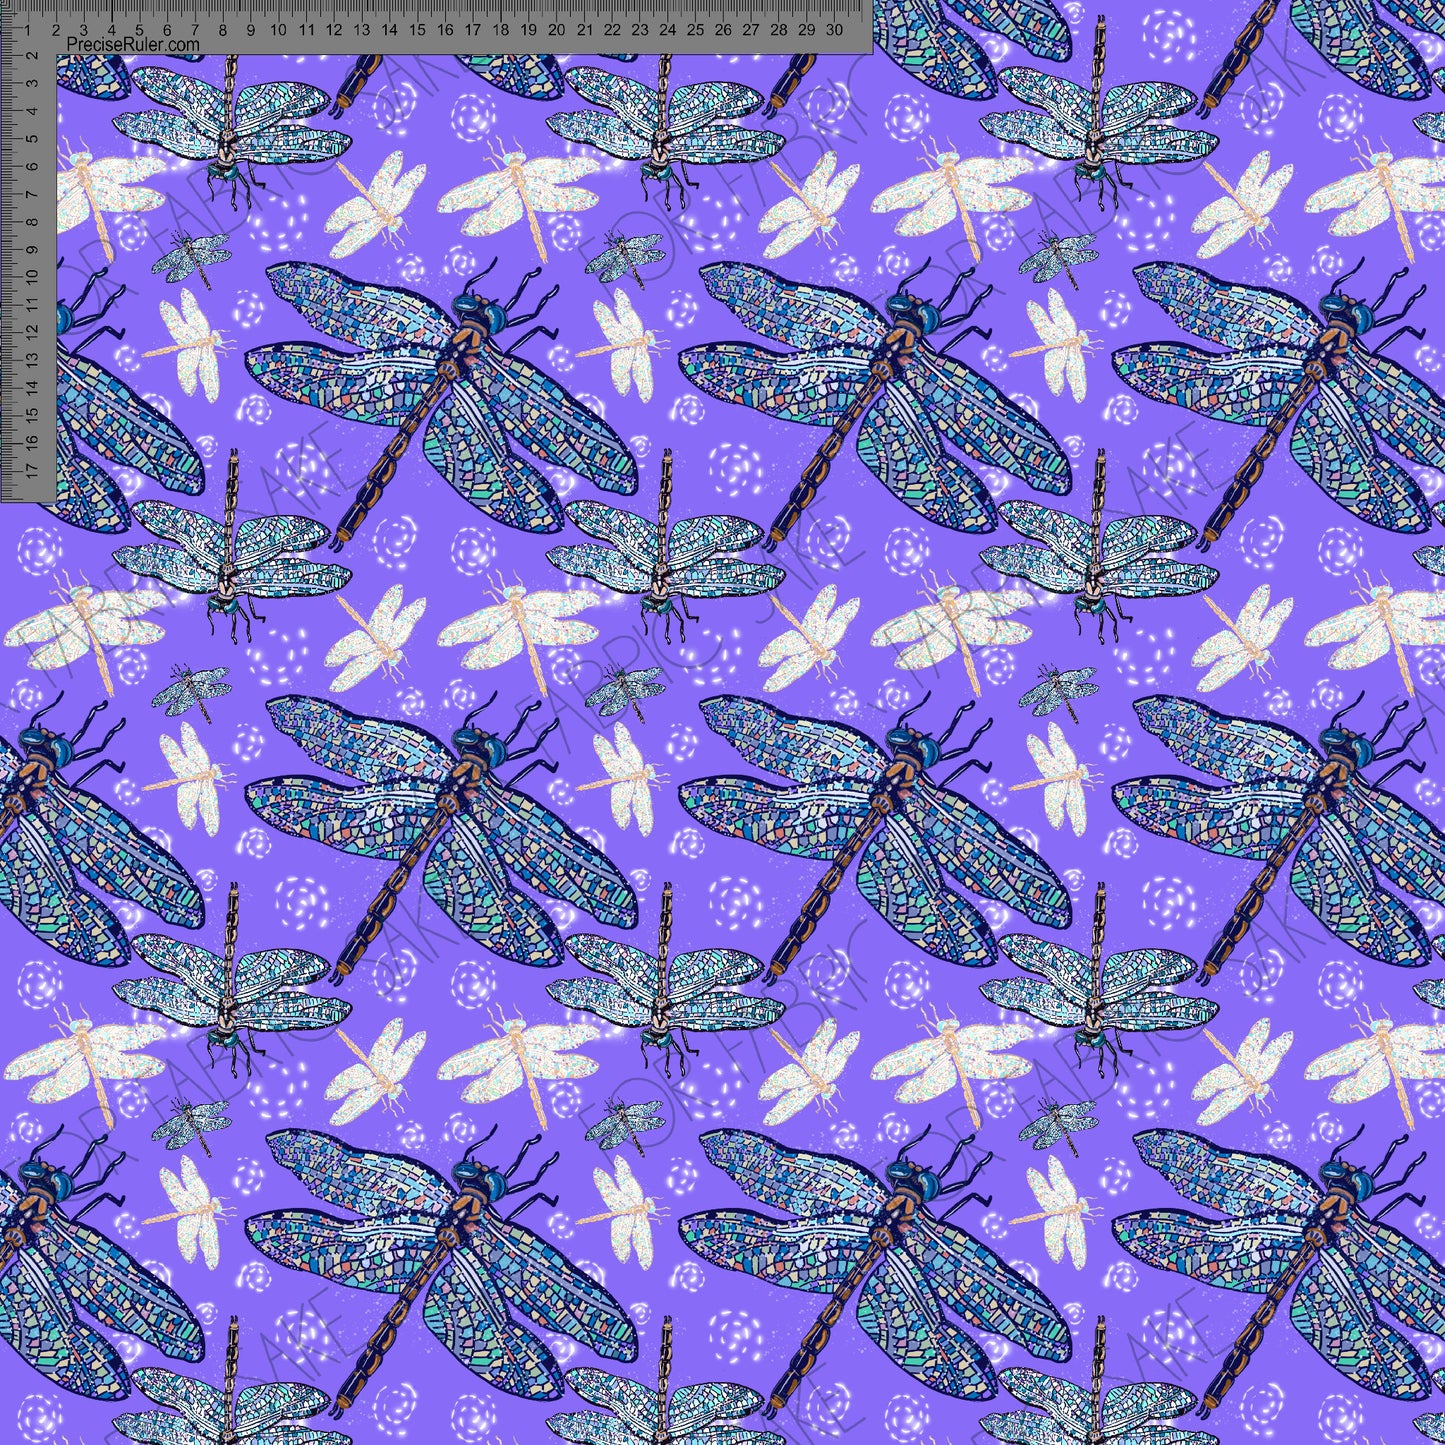 Dragonflies on purple - Sarah McAlpine Art- Custom Pre Order